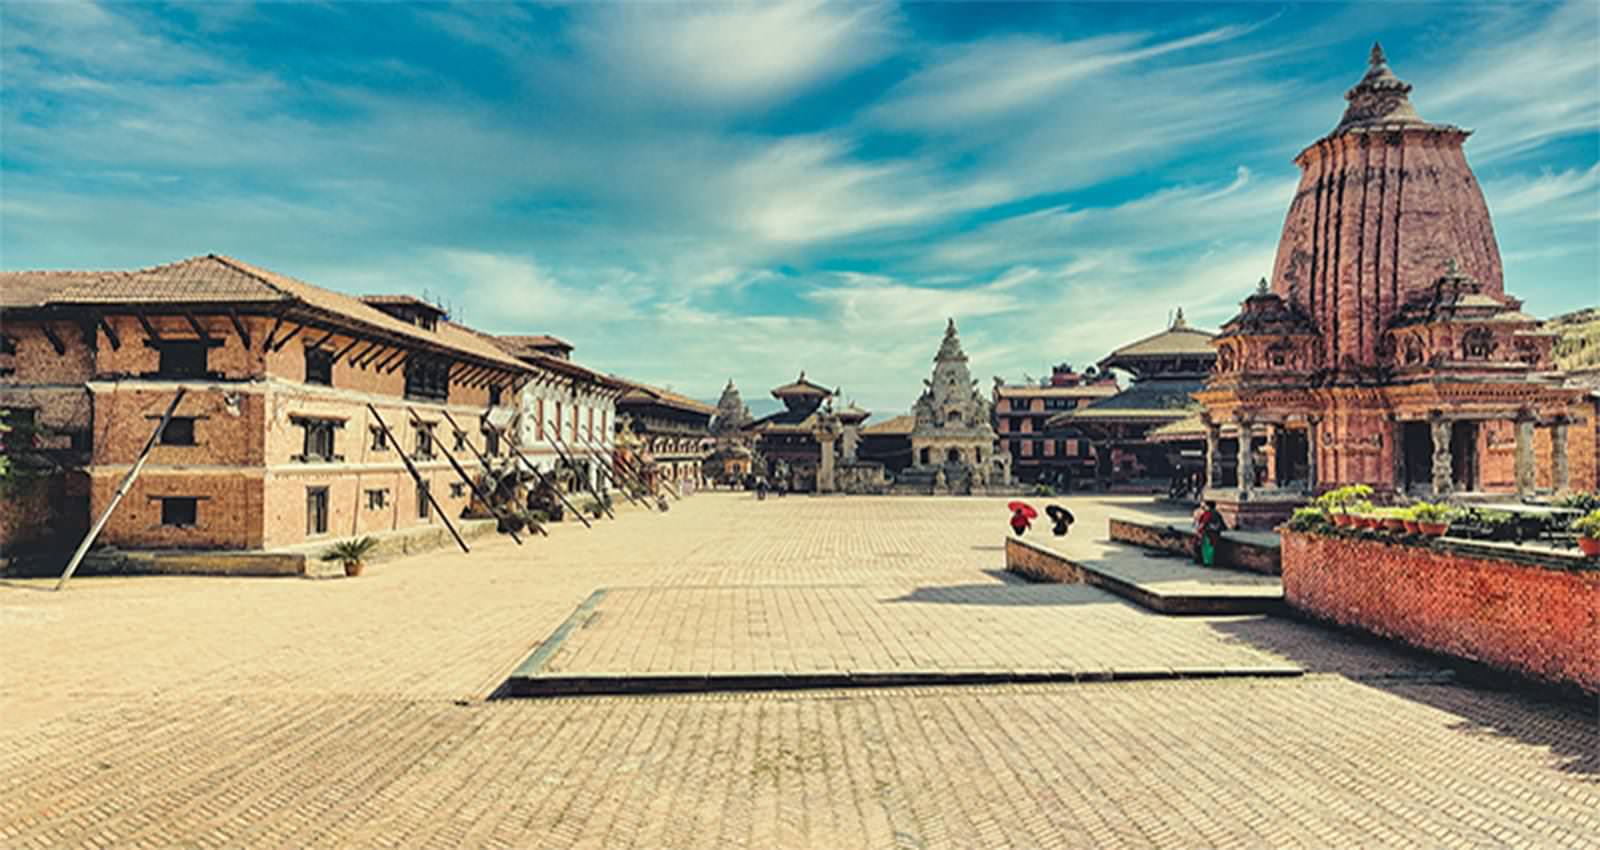 Kathmandu Pokhara Twin Valley Tour: A Tour of History and Scenery